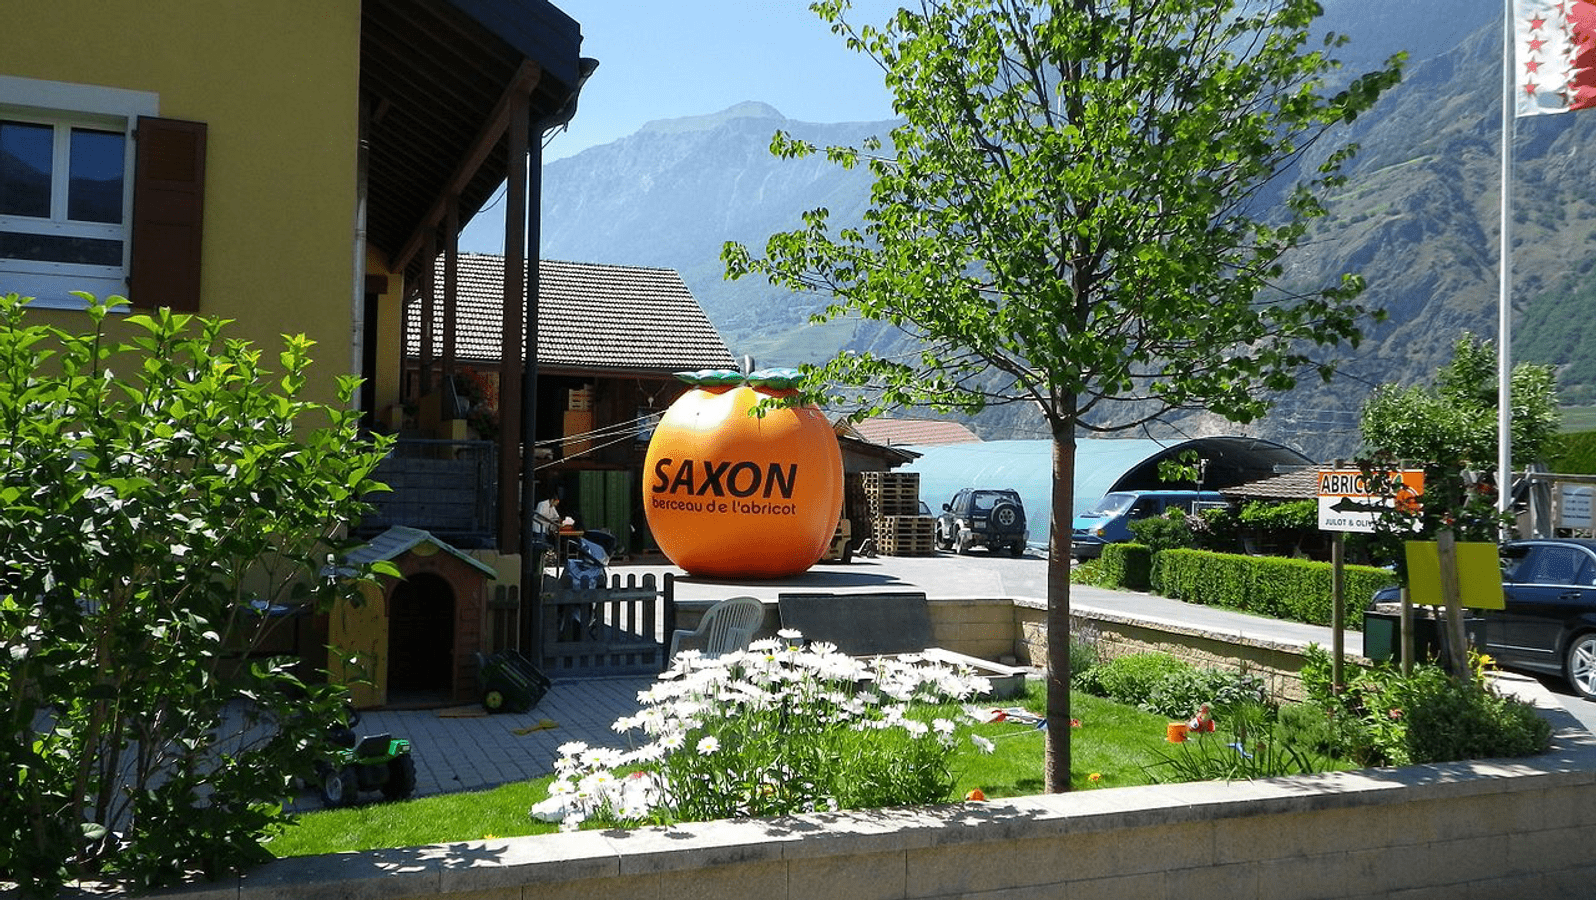 Saxon, Abricots